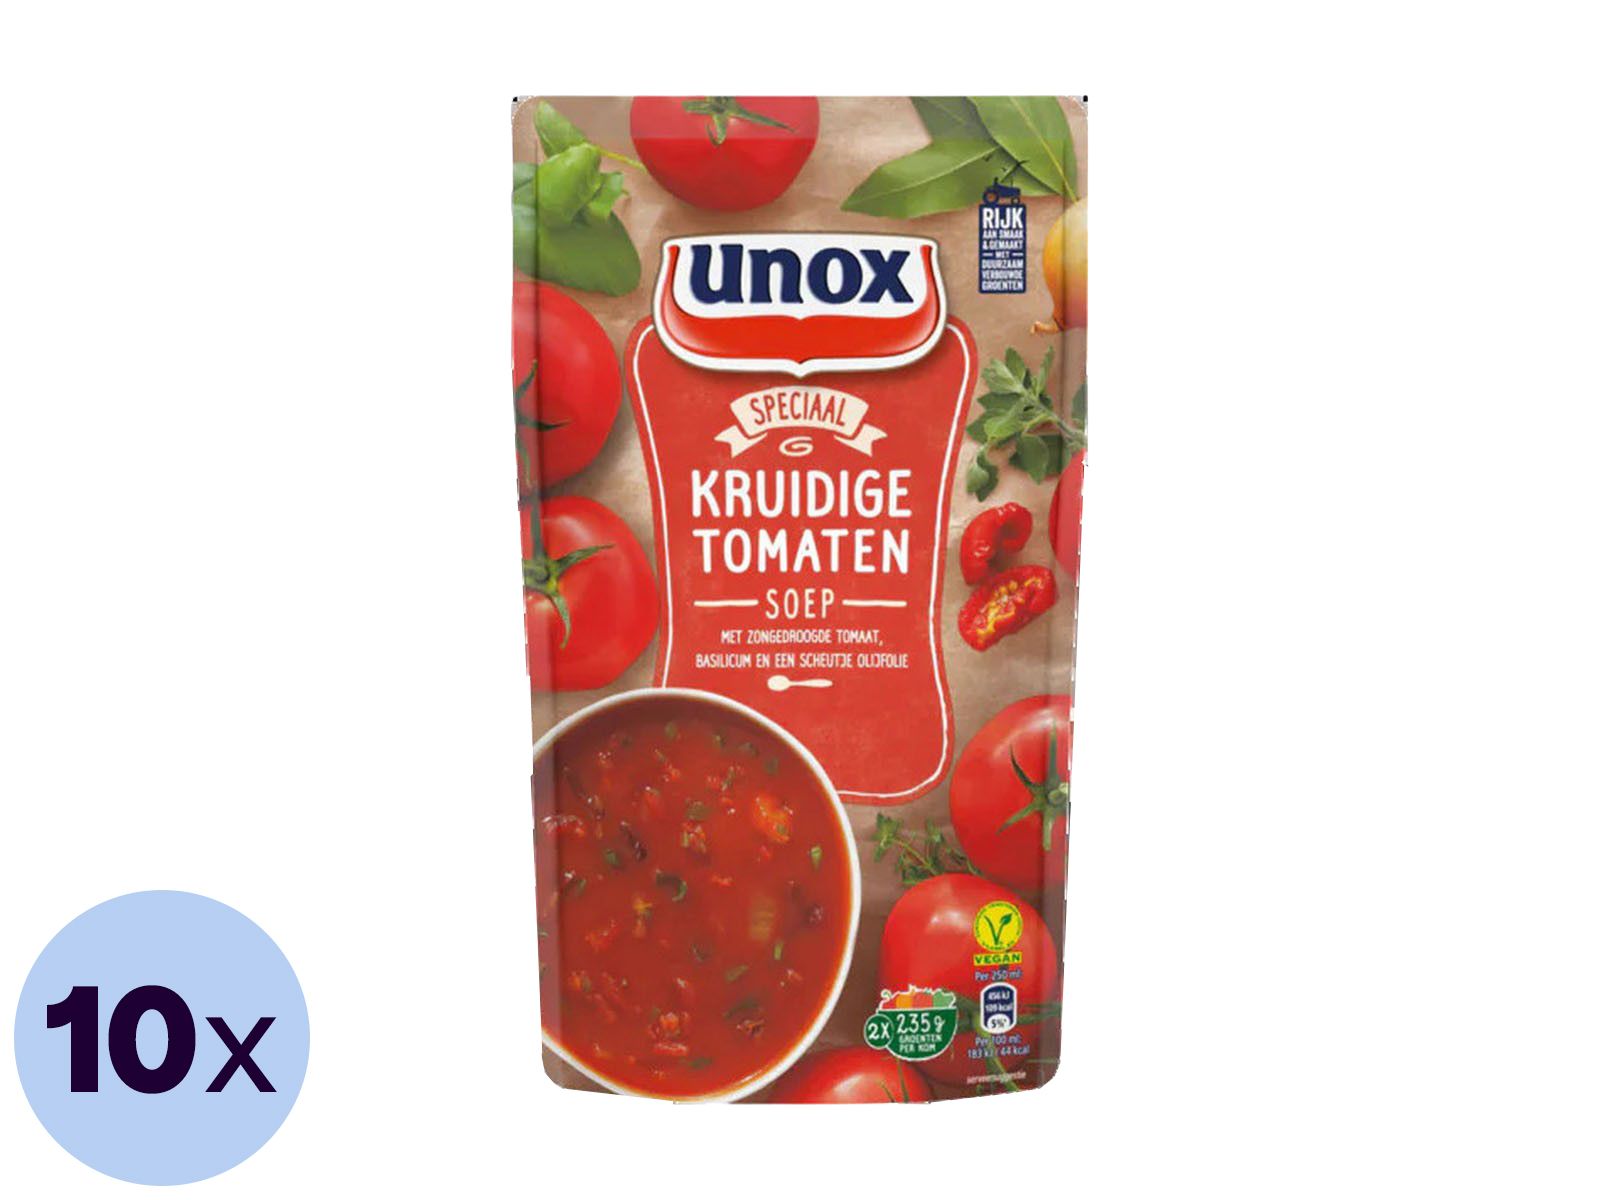 10x-unox-wurzige-tomatensuppe-570-ml